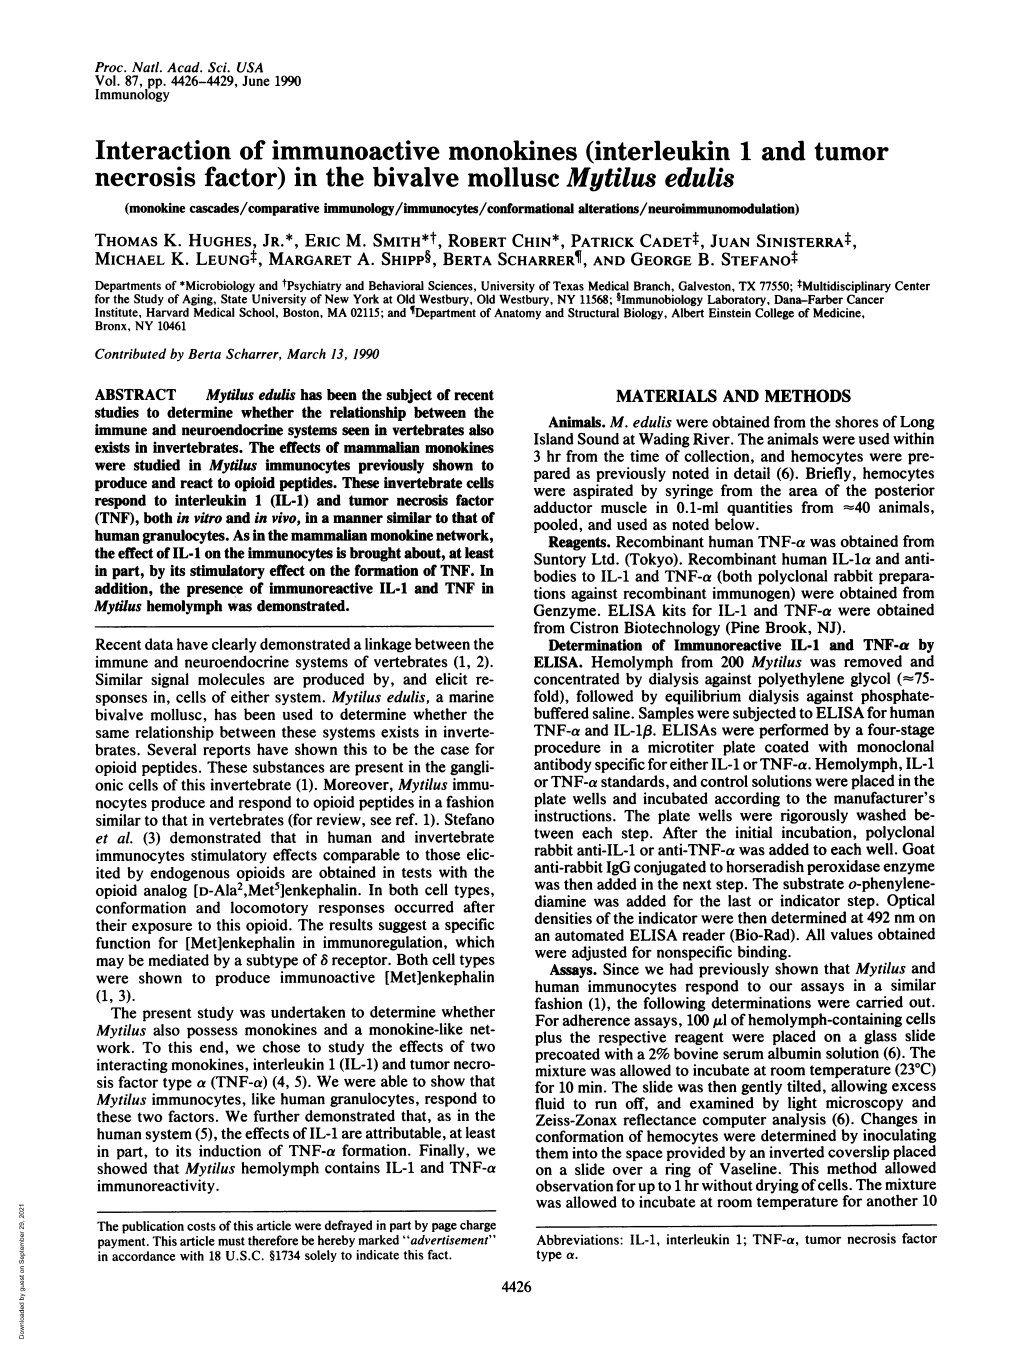 Interleukin 1 and Tumor Necrosis Factor